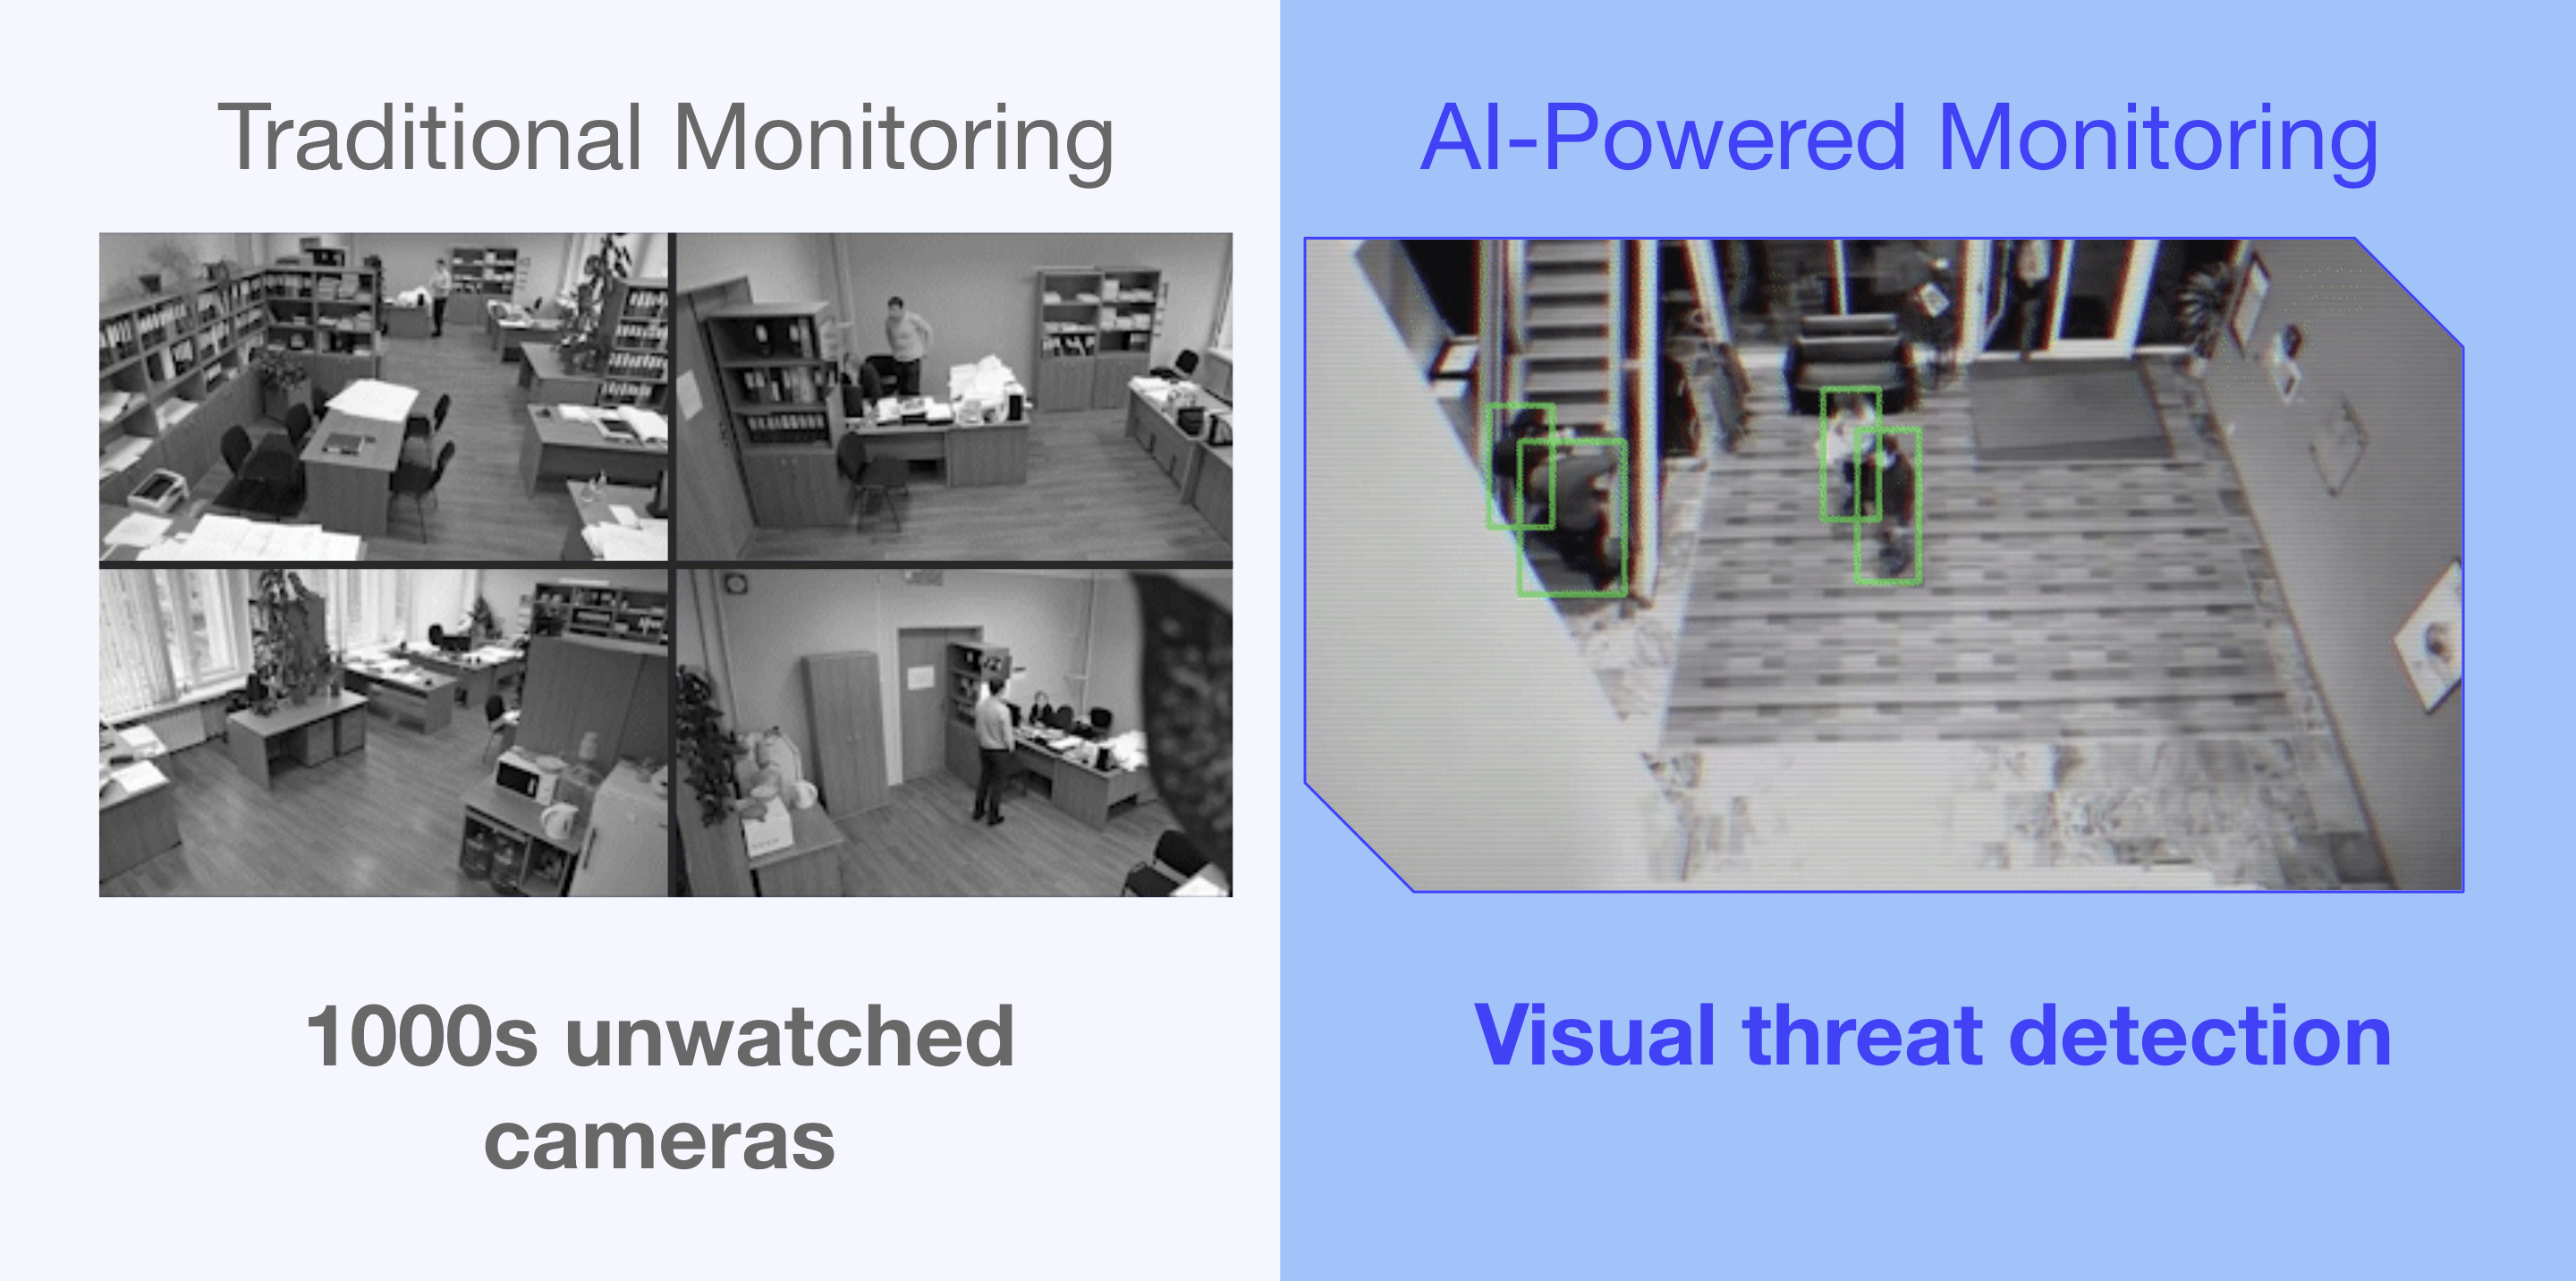 AI-powered monitoring